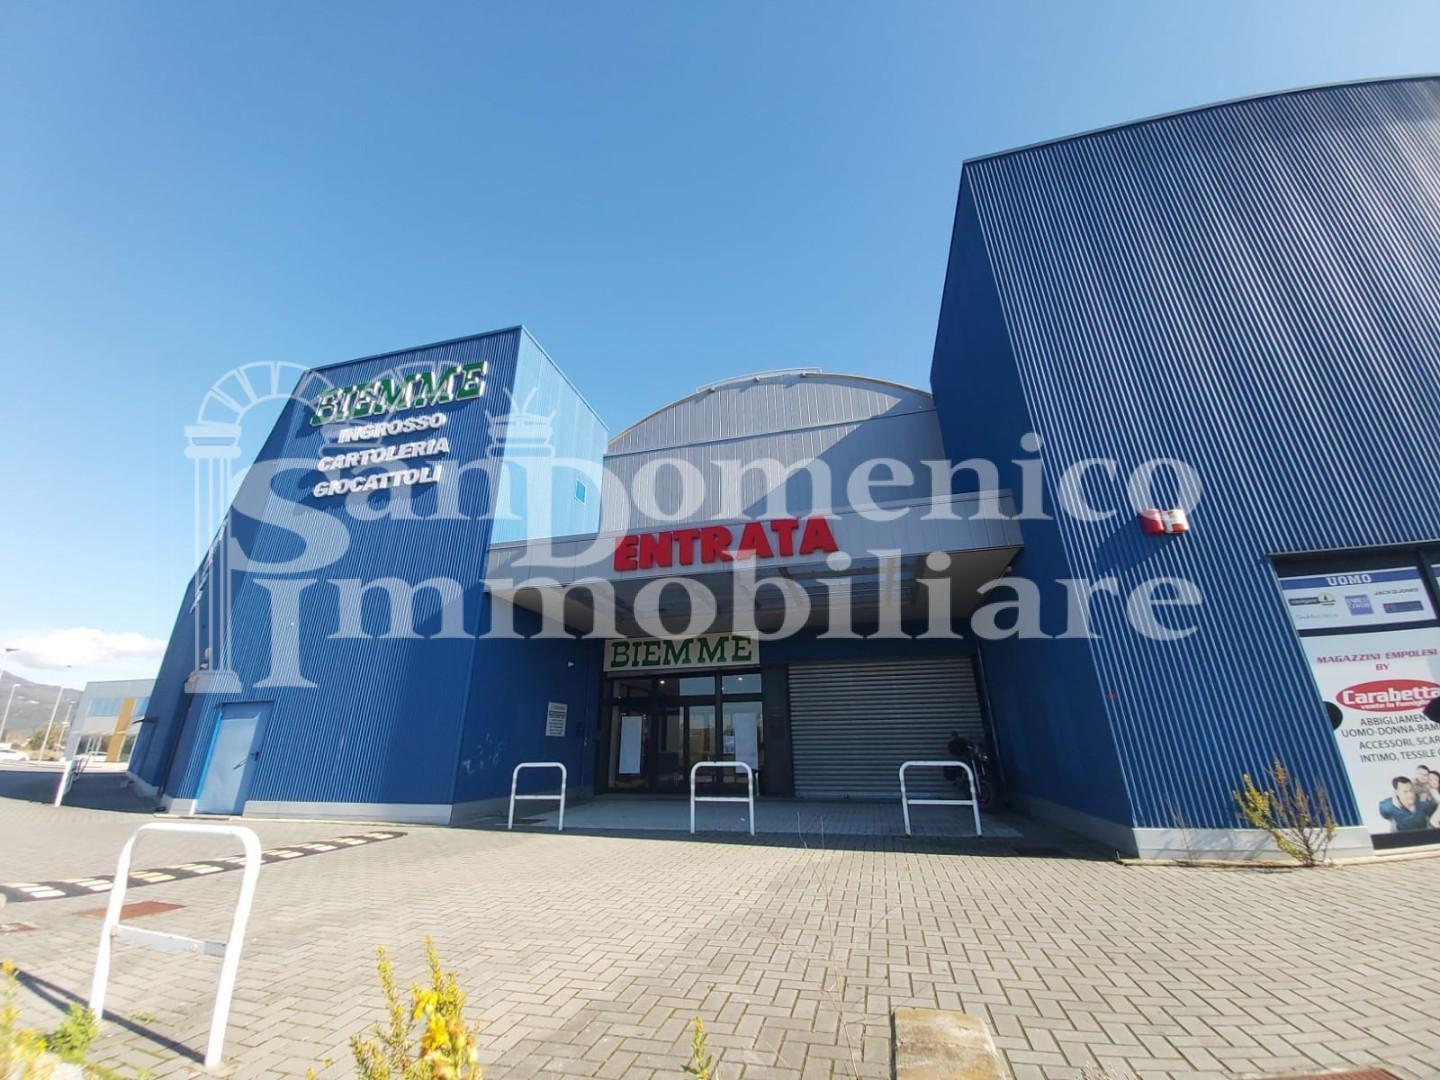 Commercial depot for sale in Cascina (PI)